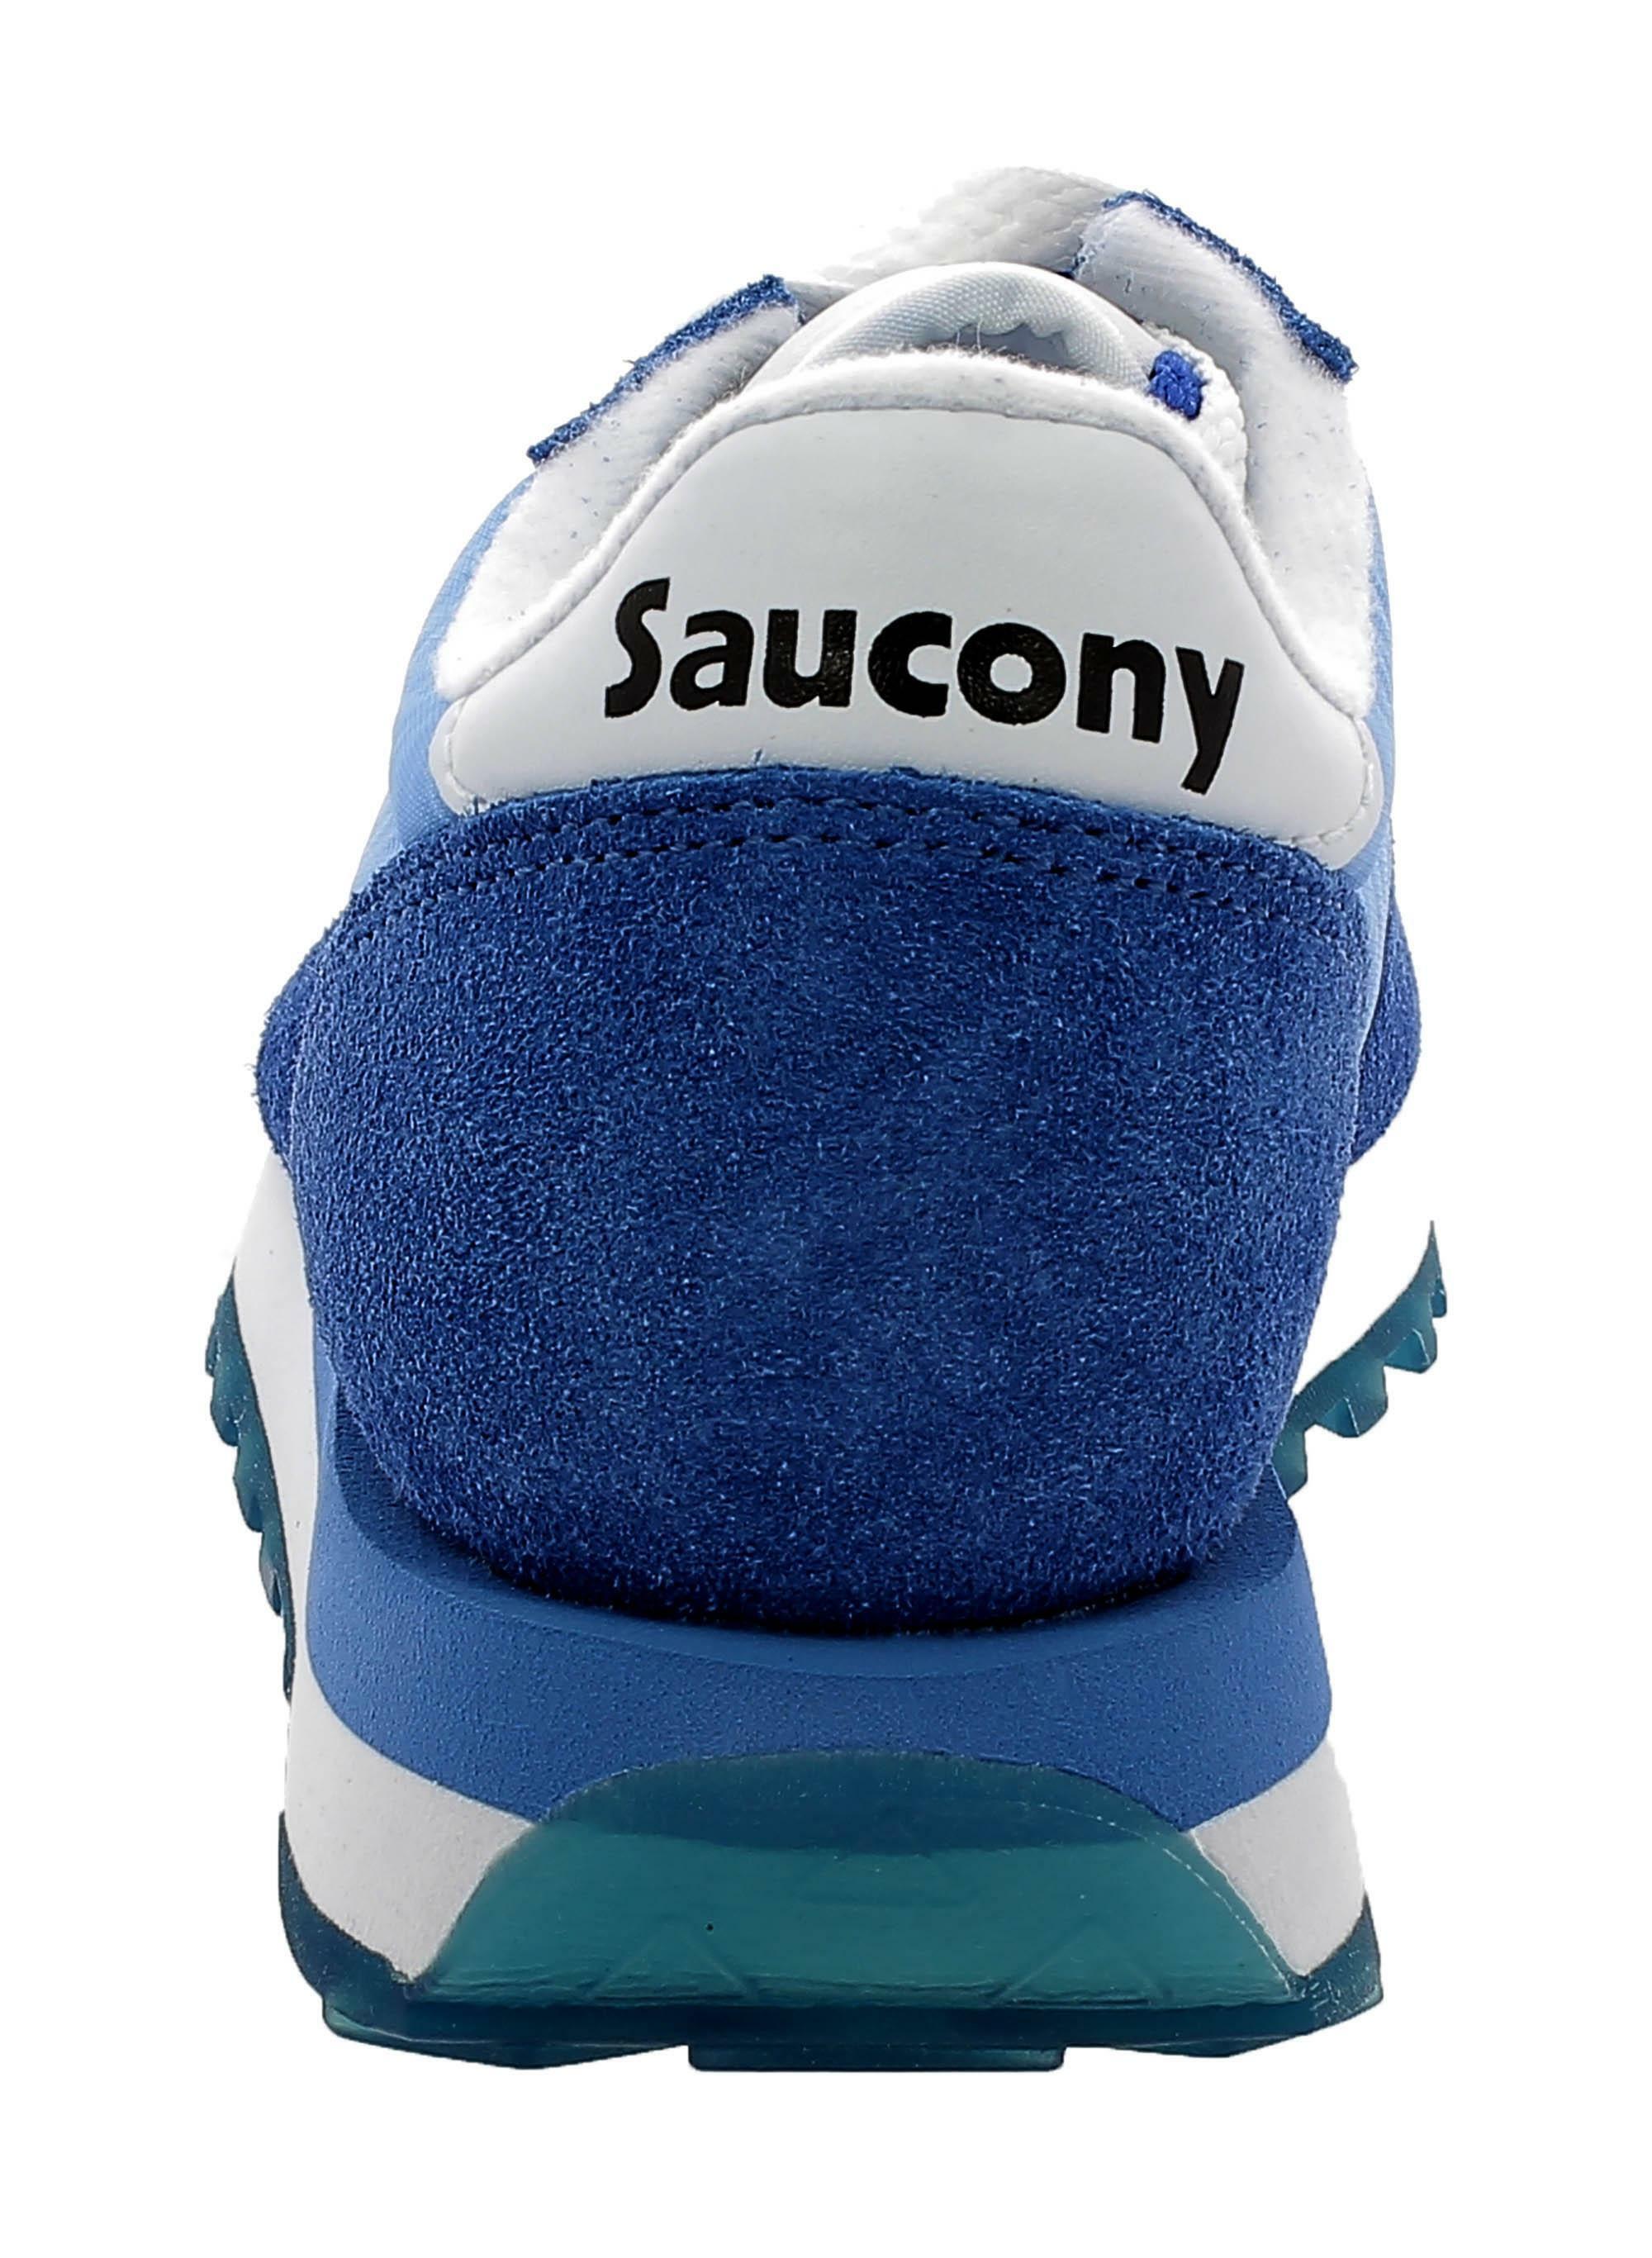 saucony saucony jazz original scarpe sportive blu 1044260